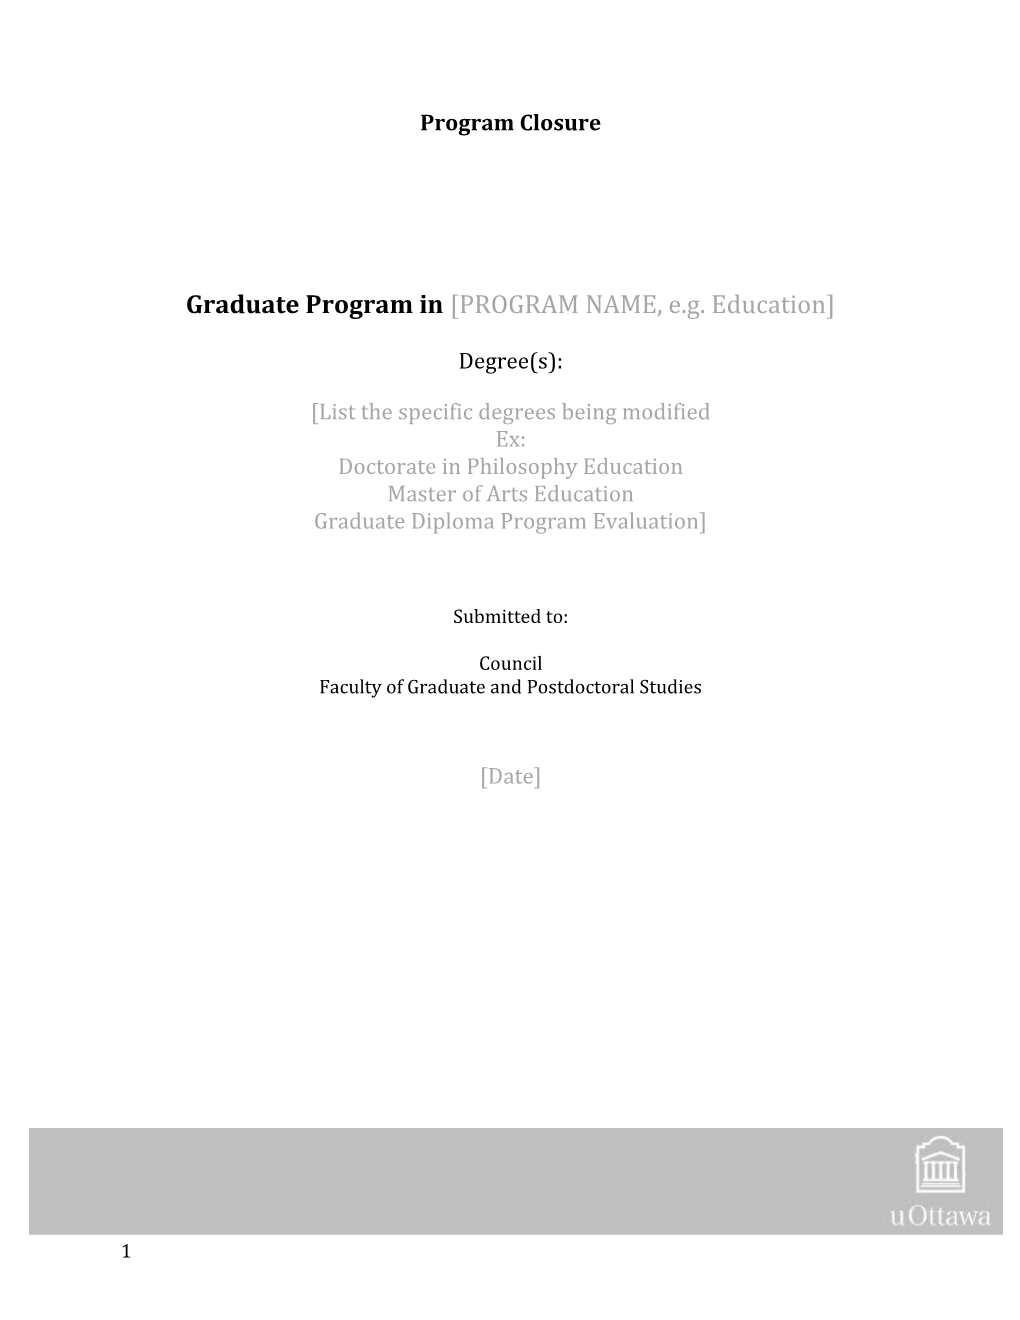 Graduate Program in PROGRAM NAME, E.G. Education